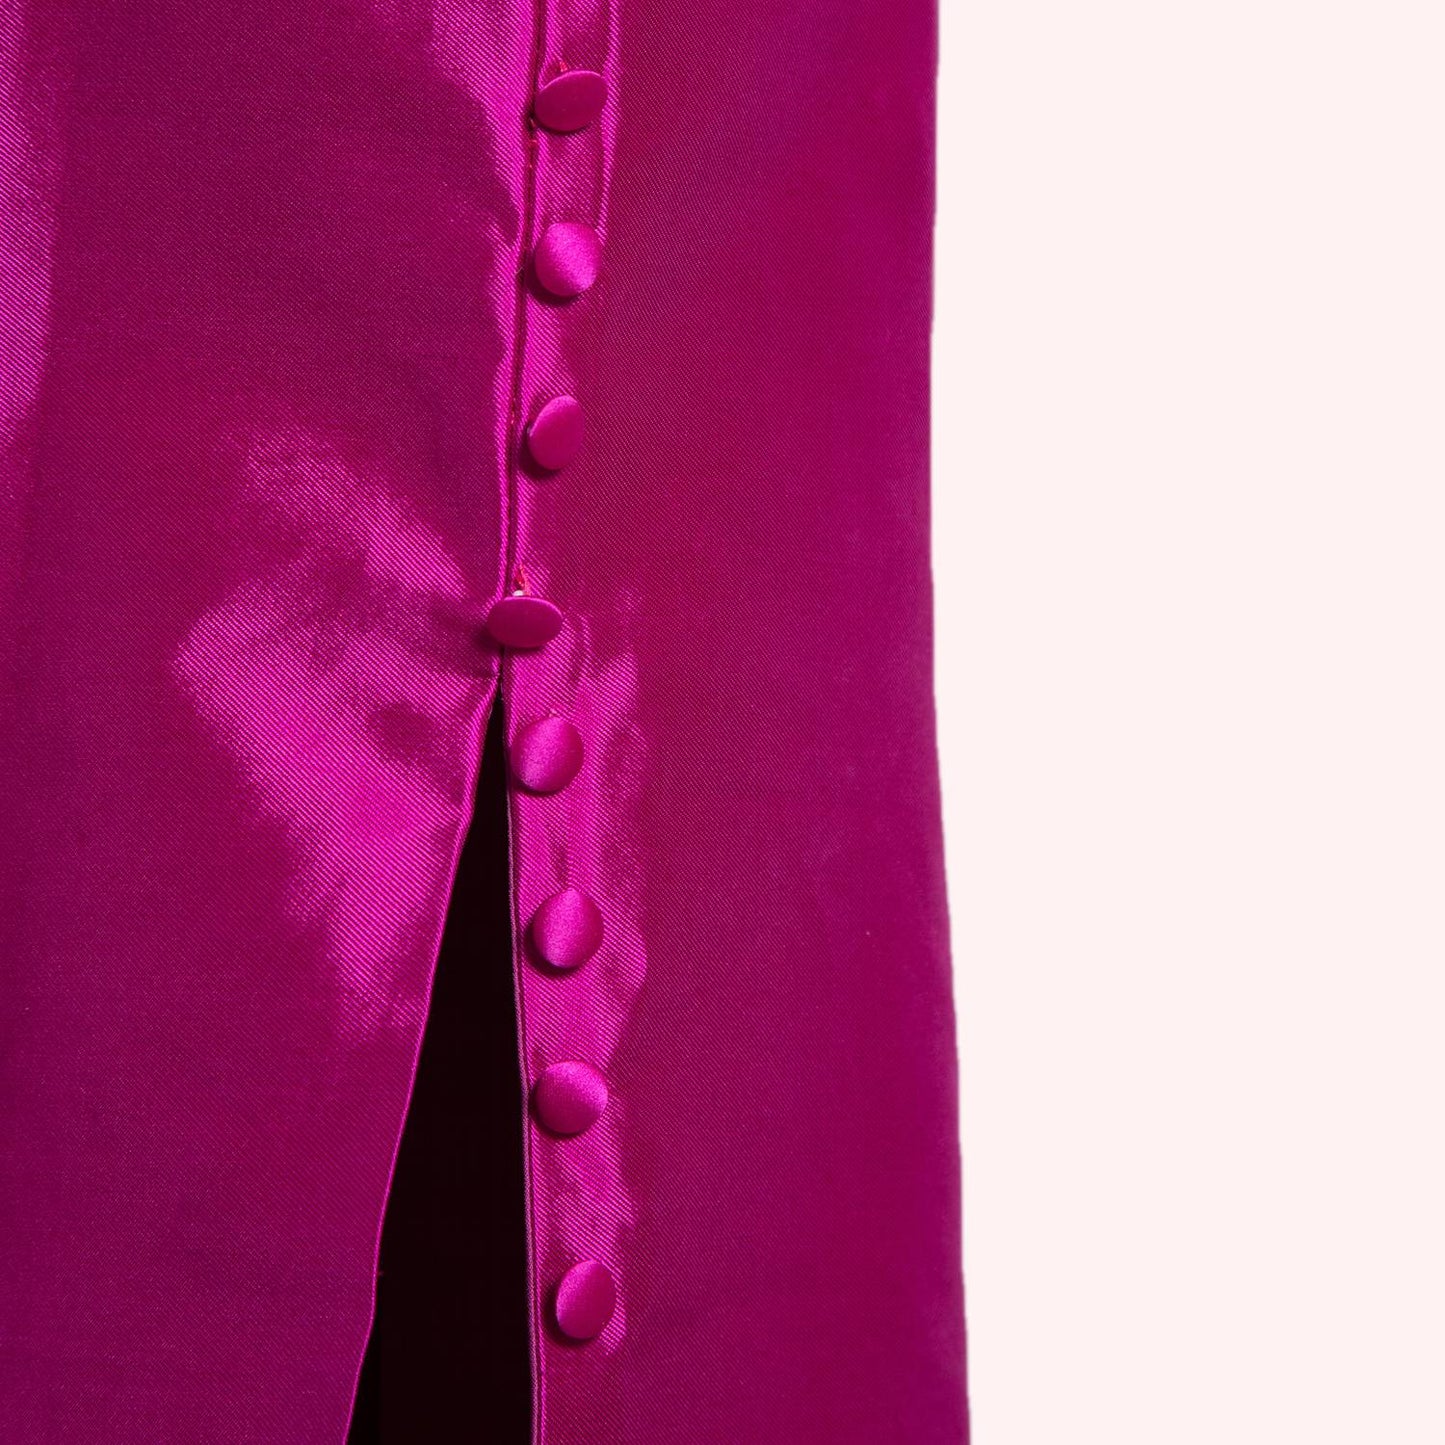 MALAN BRETON Fuschia Pink One Shoulder Silk Maxi Dress